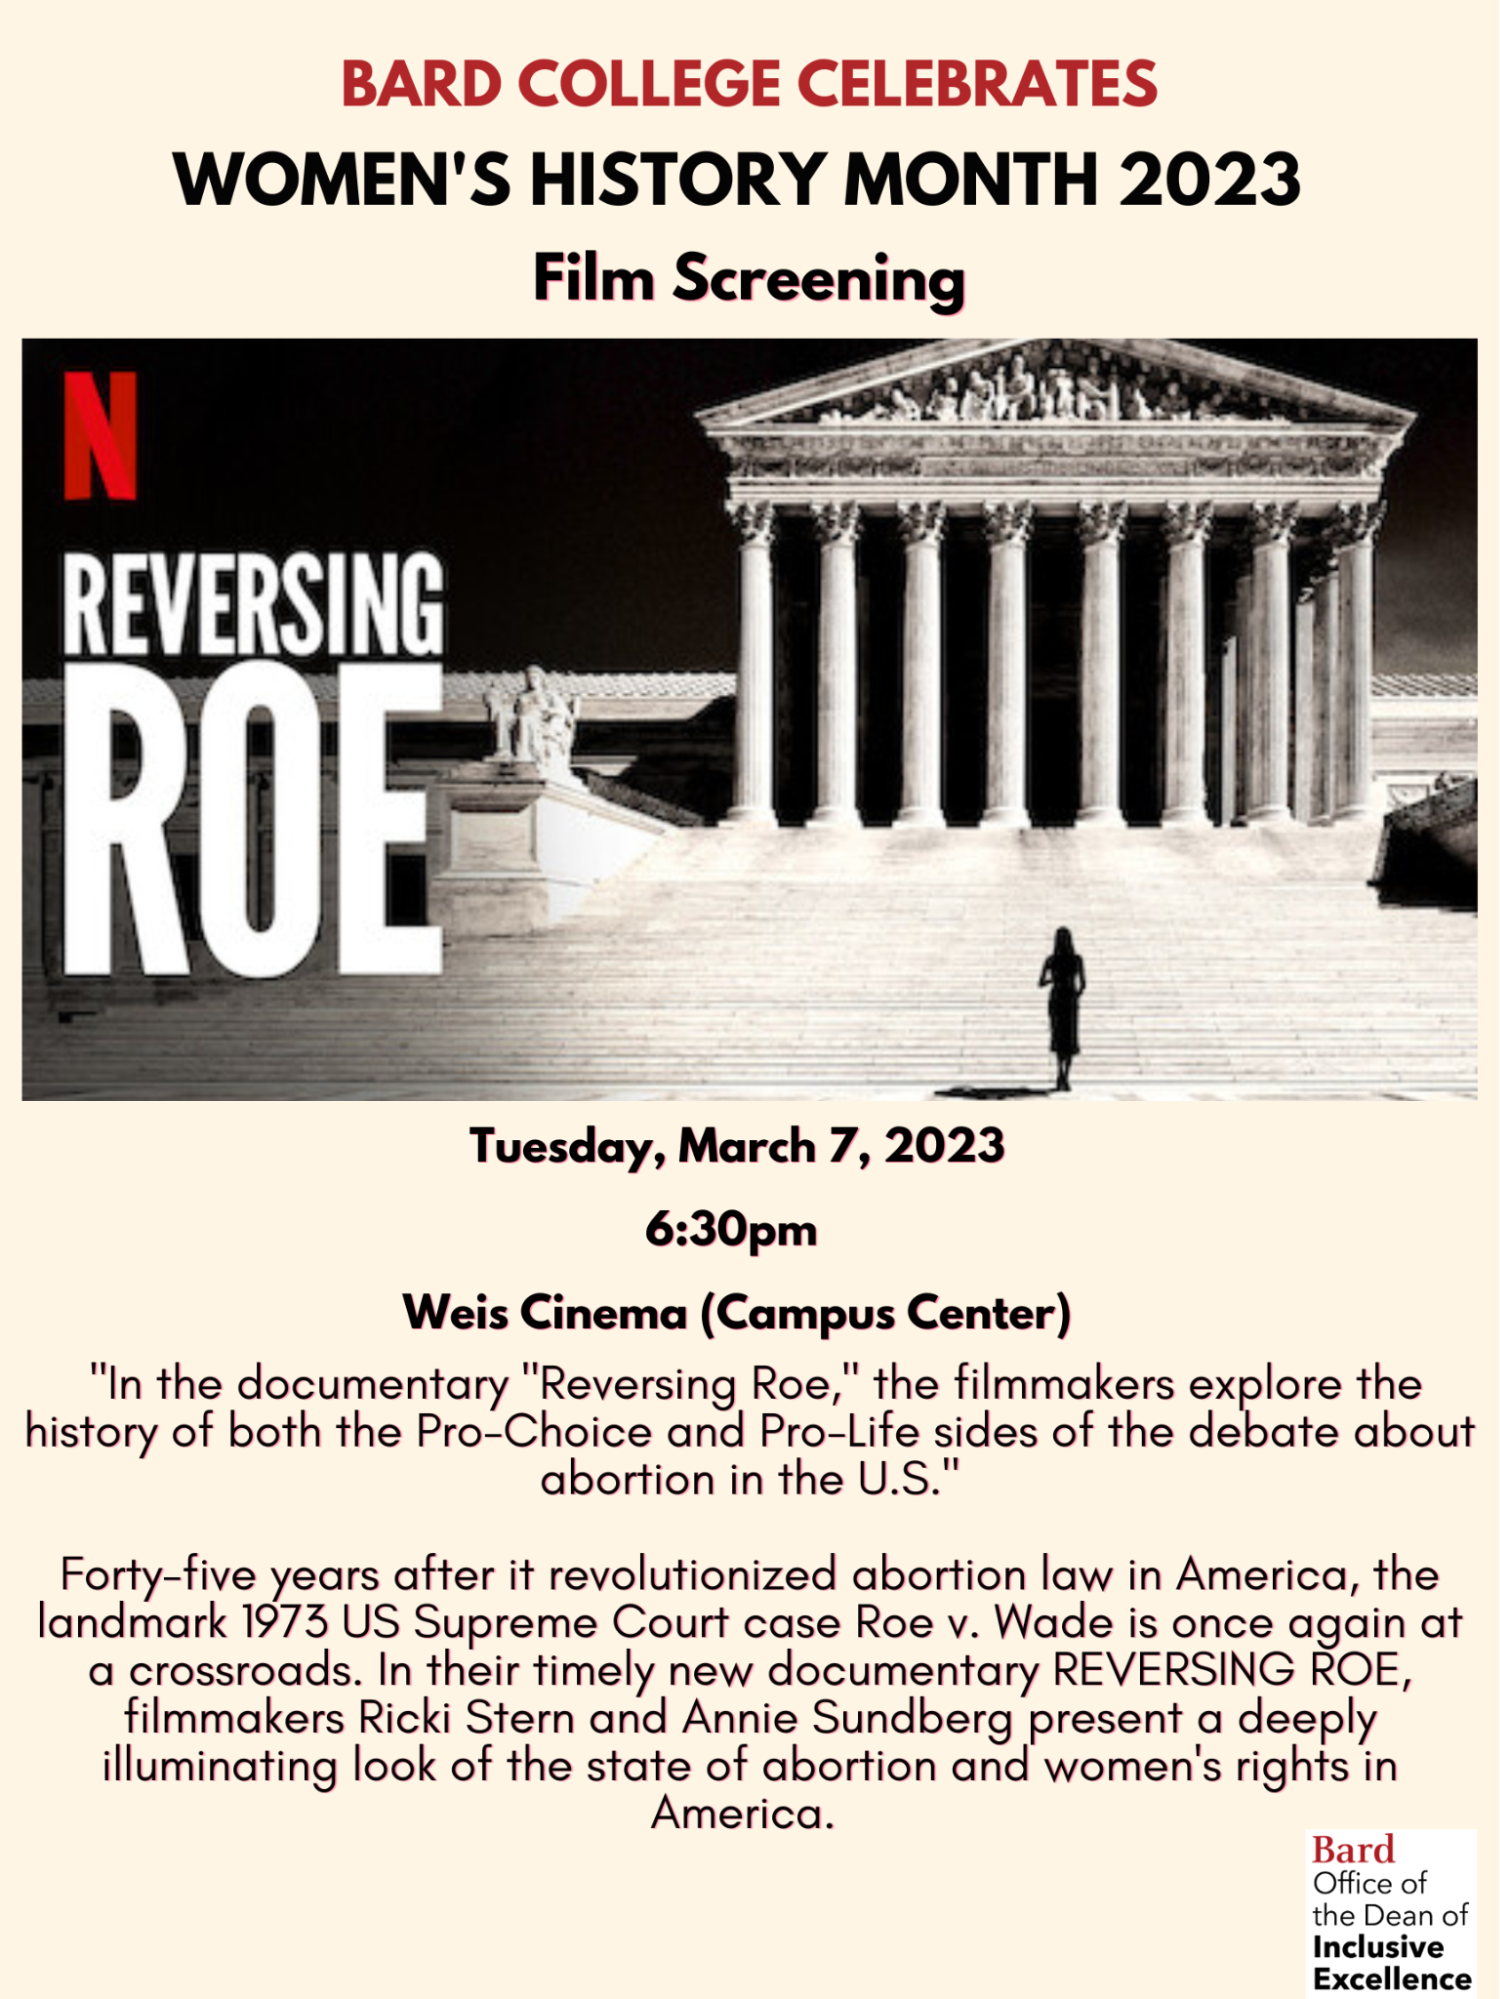 Film Screening: Reversing Roe